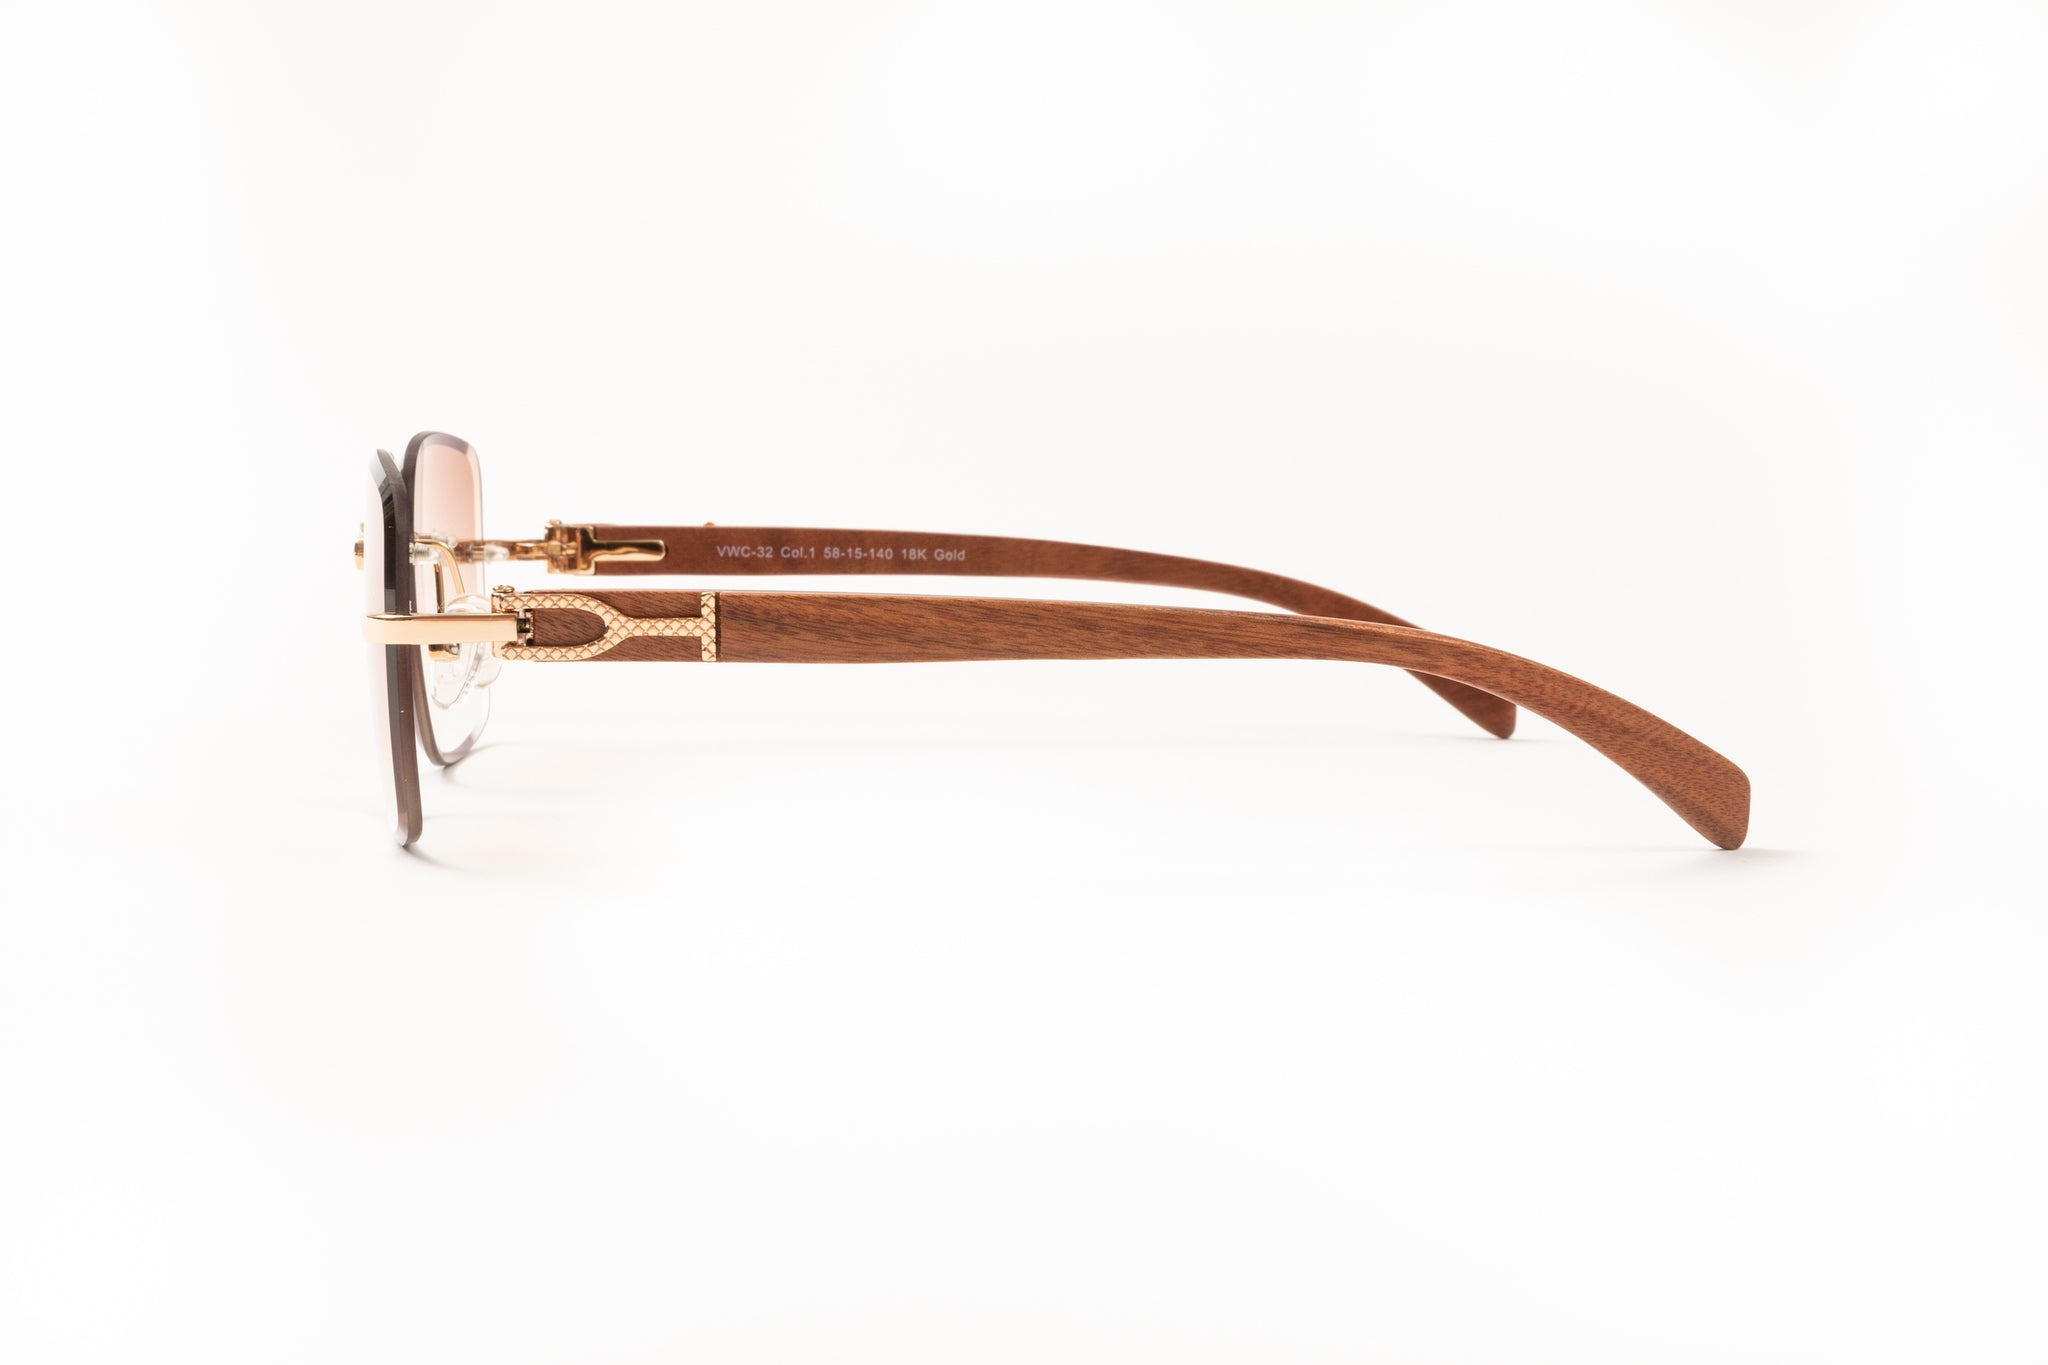 VWC Eyewear Gold & Wood C-Decor Sunglasses, 18kt Gold-Plated Frame, Gradient Brown Lenses